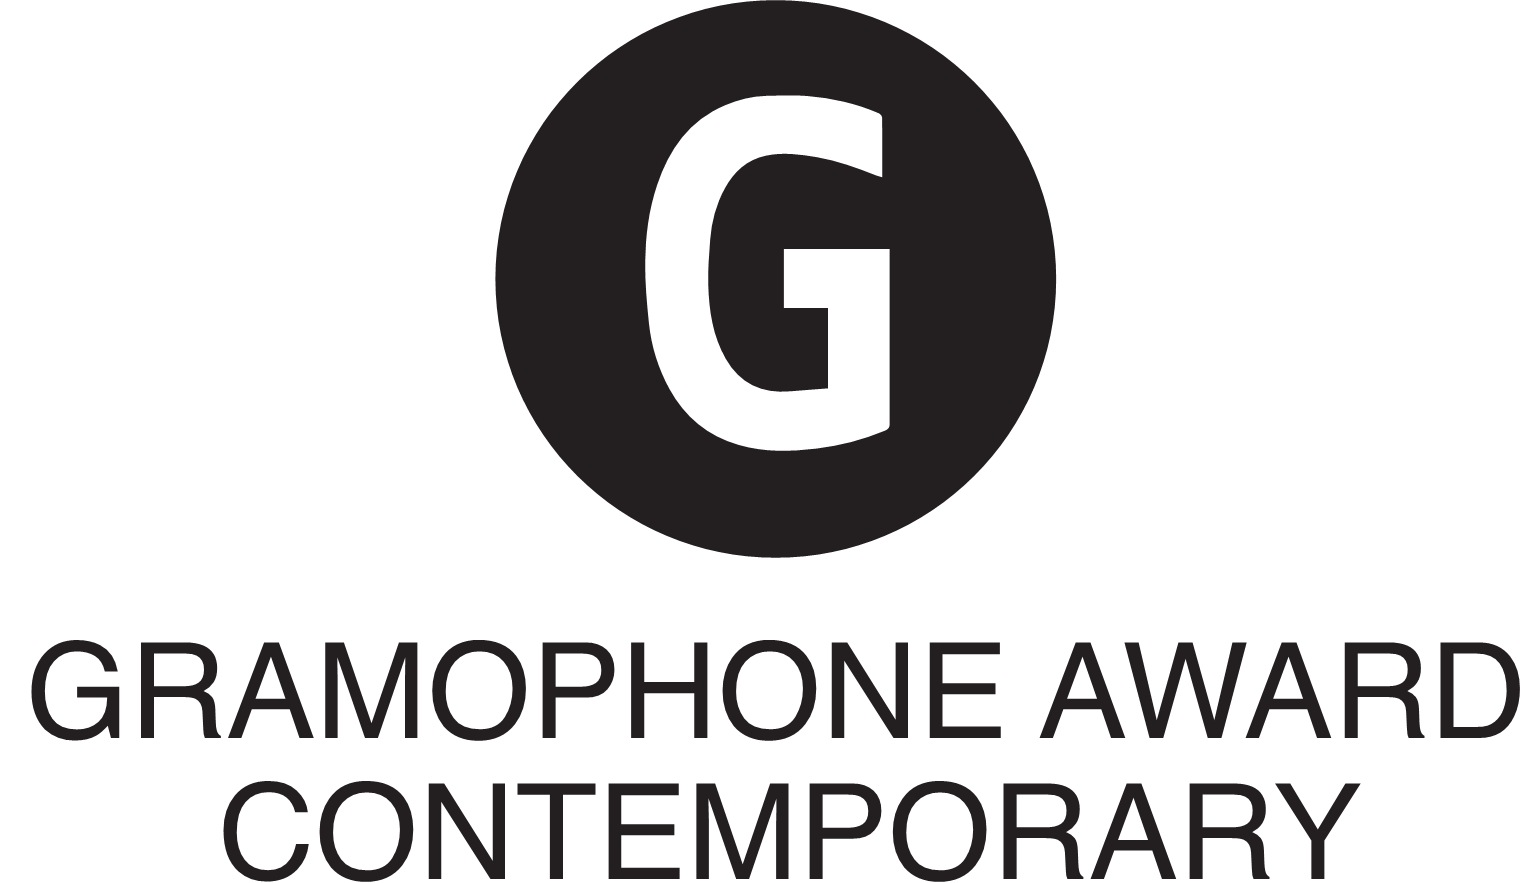 Gramophone Award: 'Contemporary' (2014)